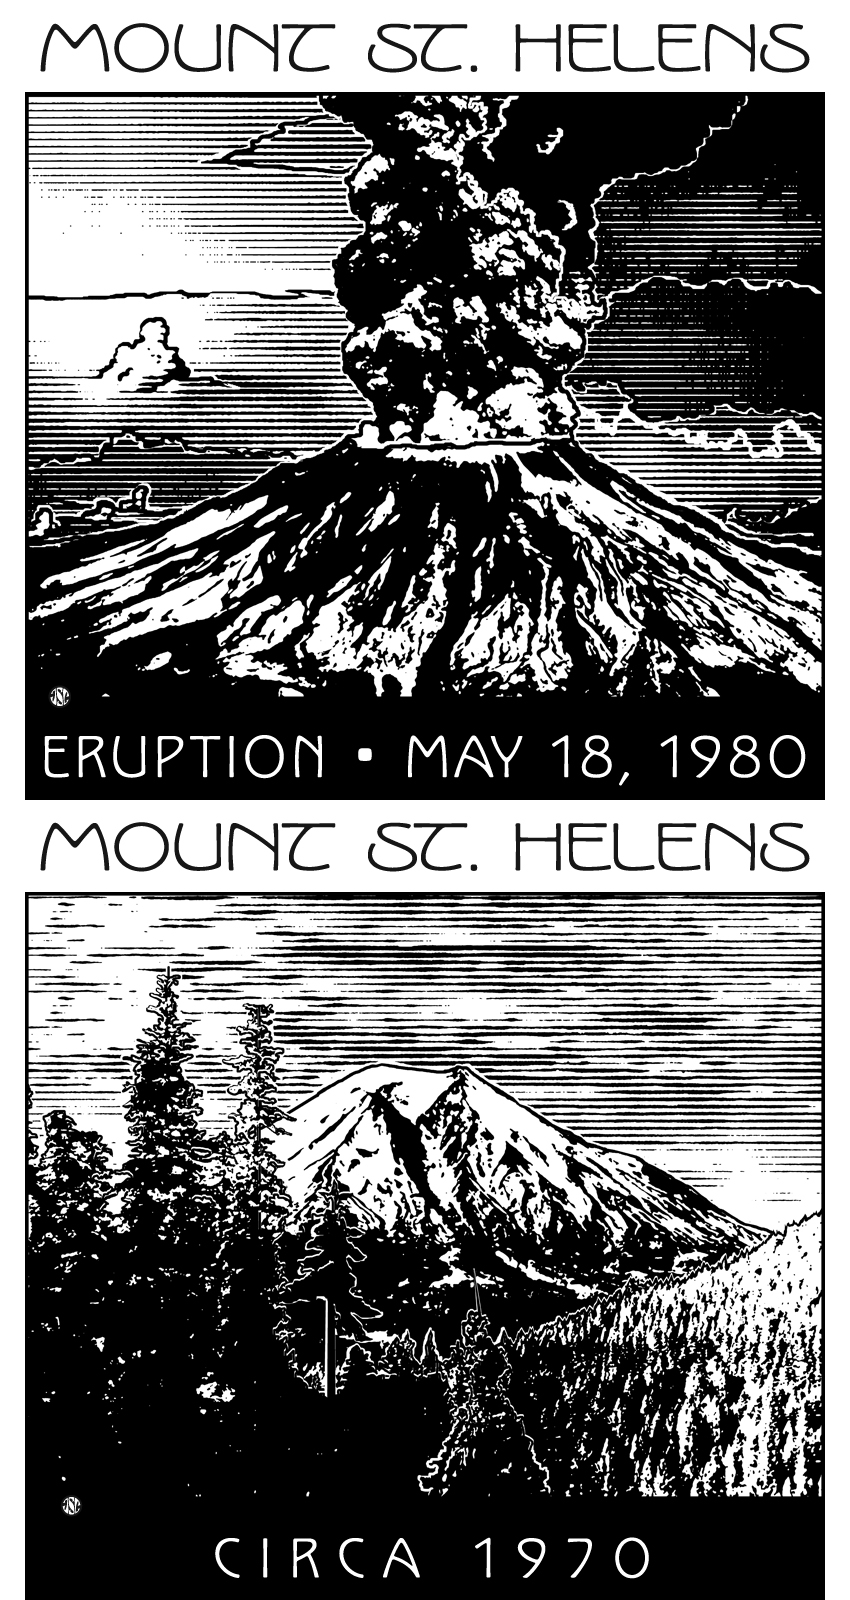 Mt St. Helens